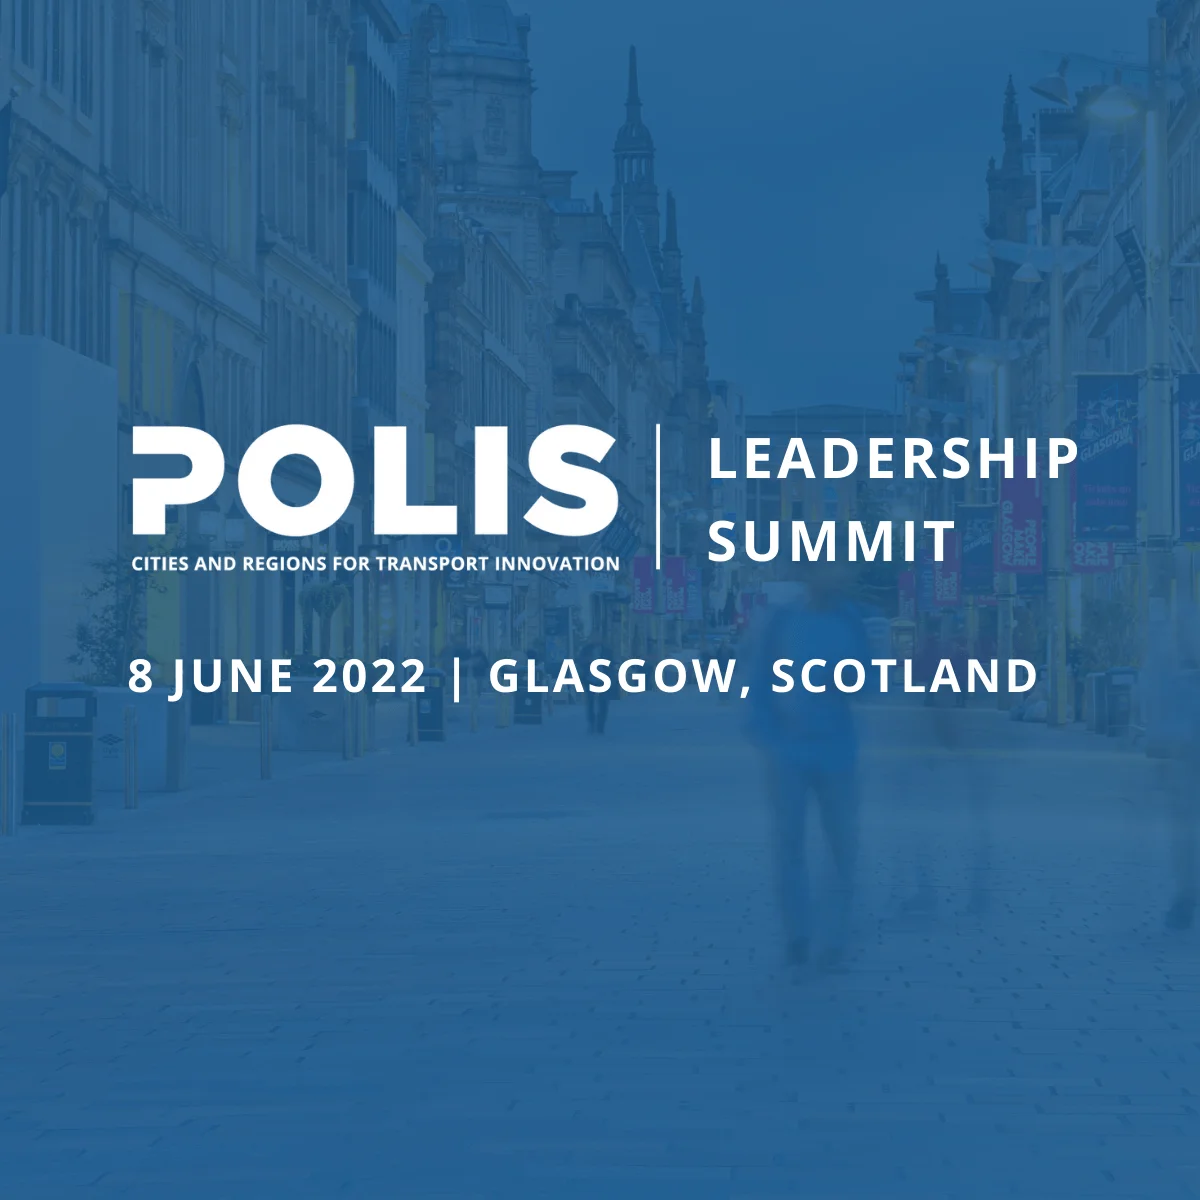 Leadership Summit in Glasgow: Registrations open!